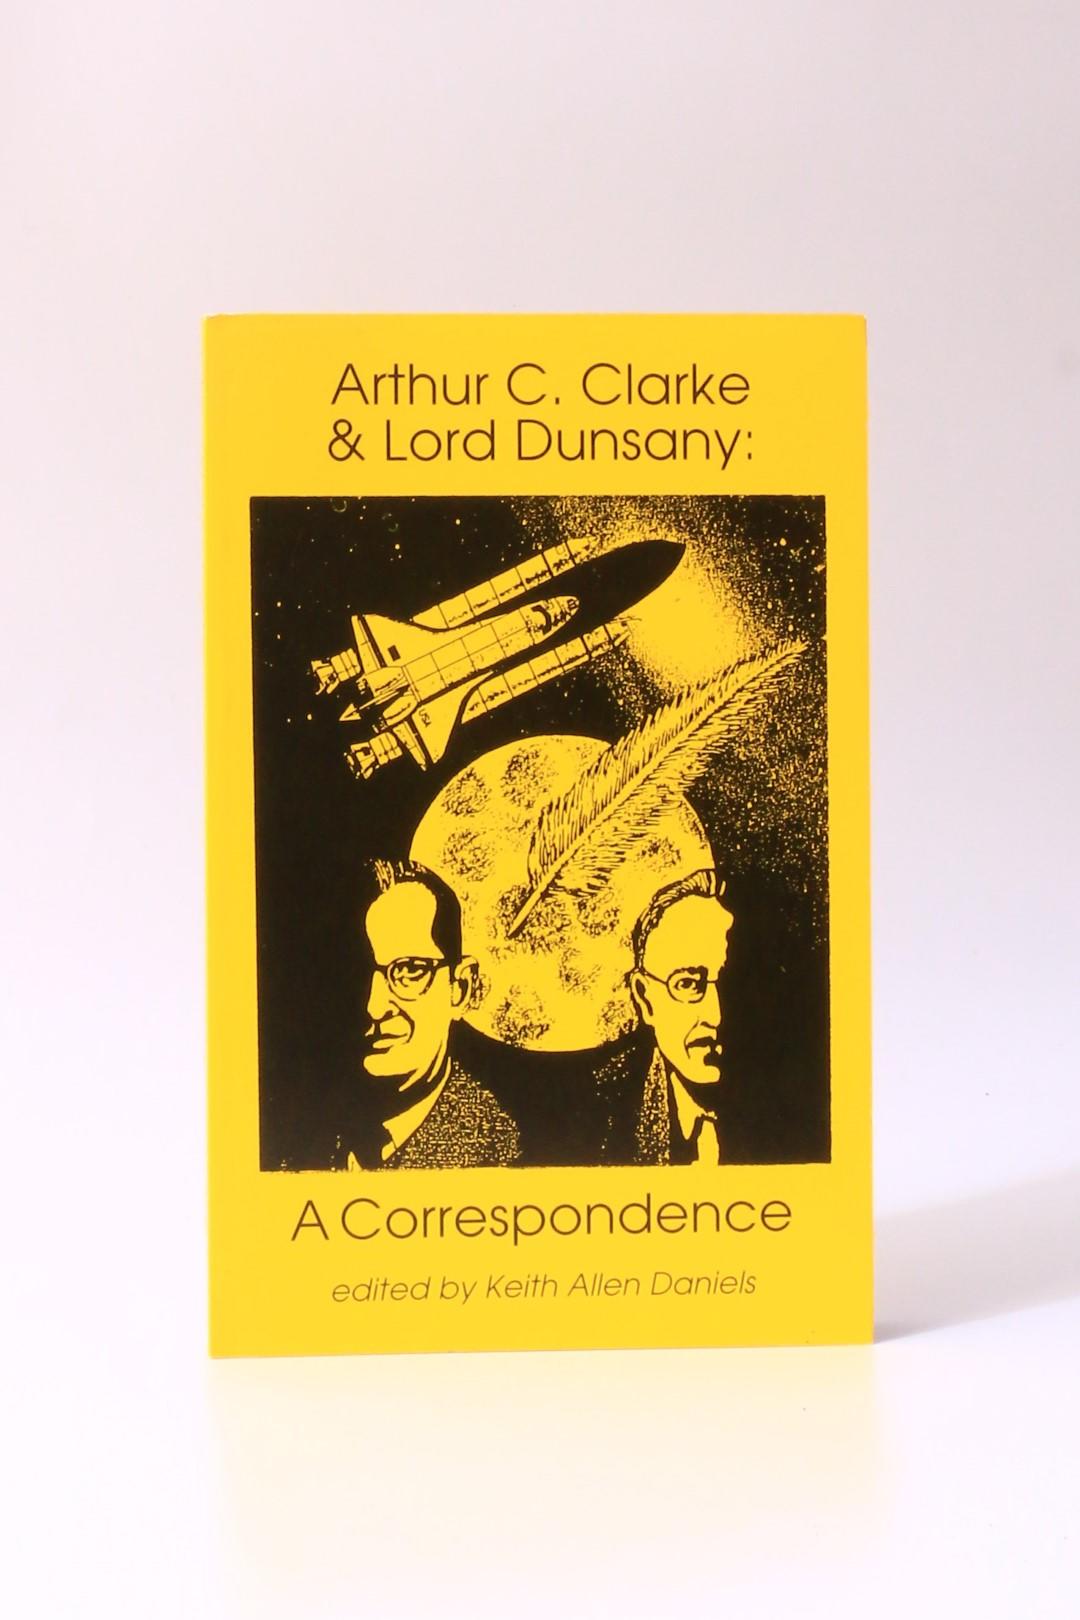 Arthur C. Clarke & Lord Dunsany [ed. Keith Allen Daniels] - A Correspondence - Anamnesis Press, 1998, First Edition.